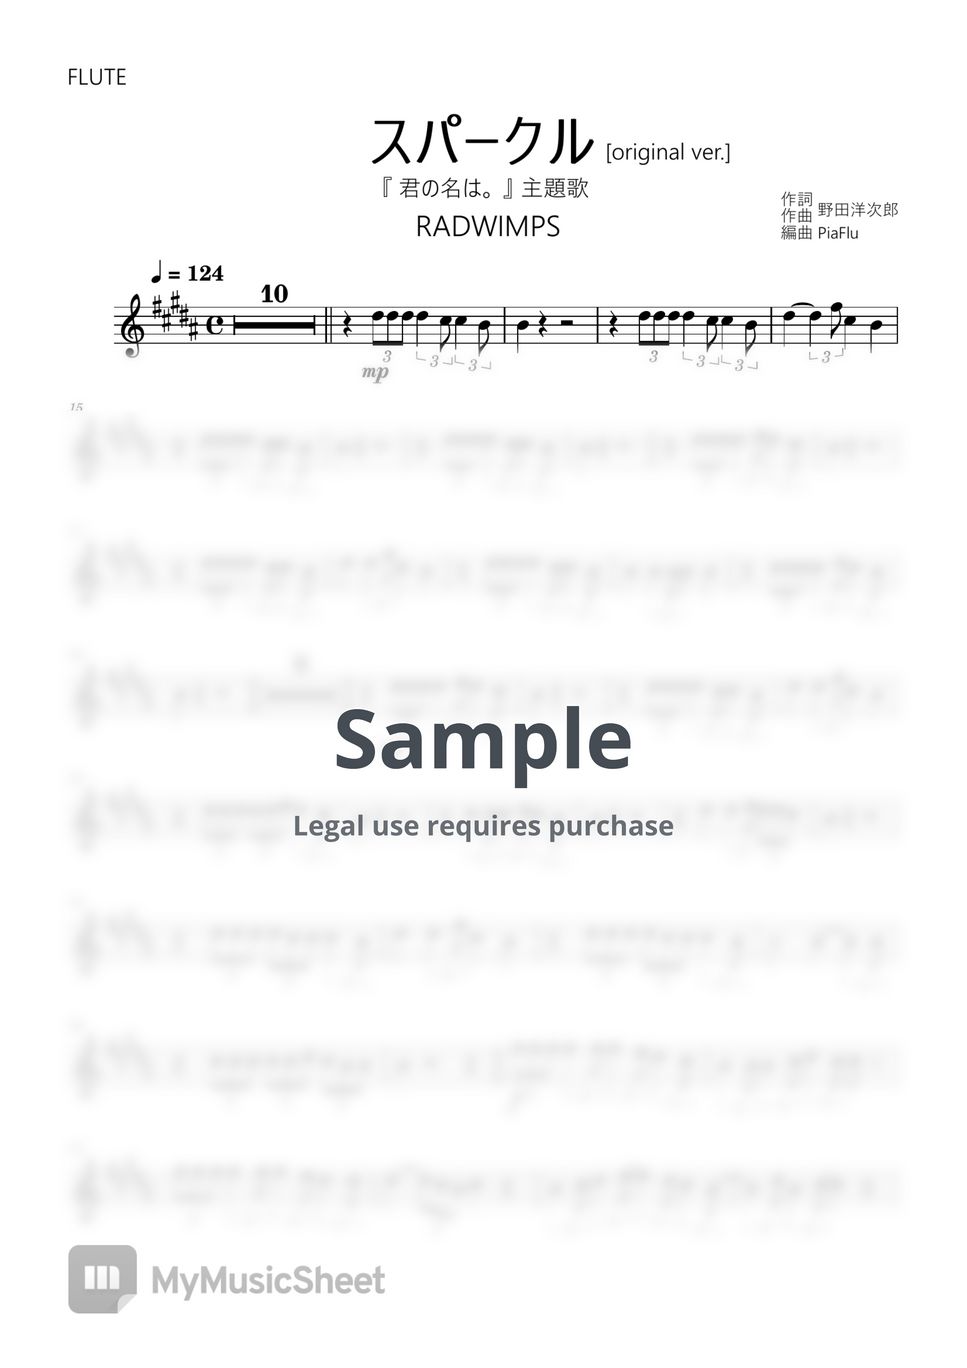 RADWIMPS - スパークル [original ver.] / RADWIMPS - Sparkle (Flute) by PiaFlu / ピアフル Piano&Flute